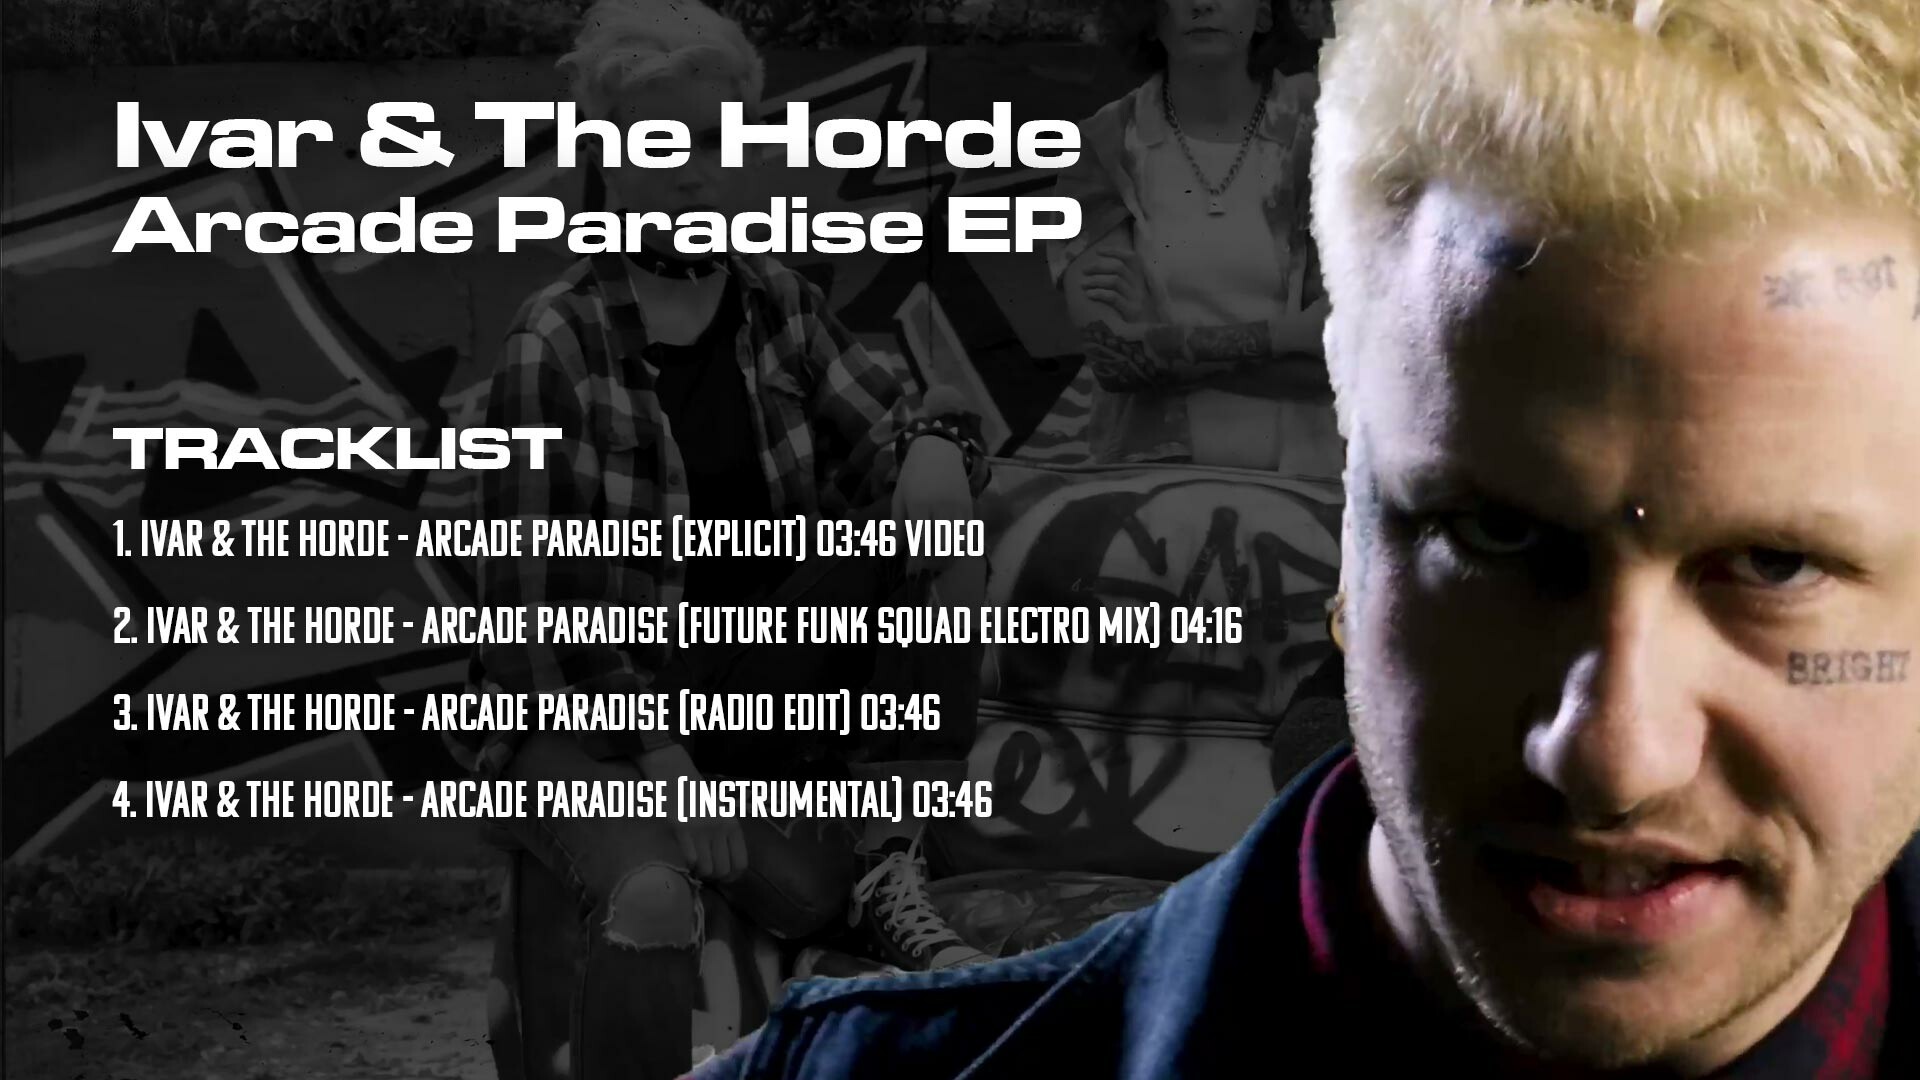 Arcade Paradise - Arcade Paradise EP DLC Steam CD Key 0.5 usd